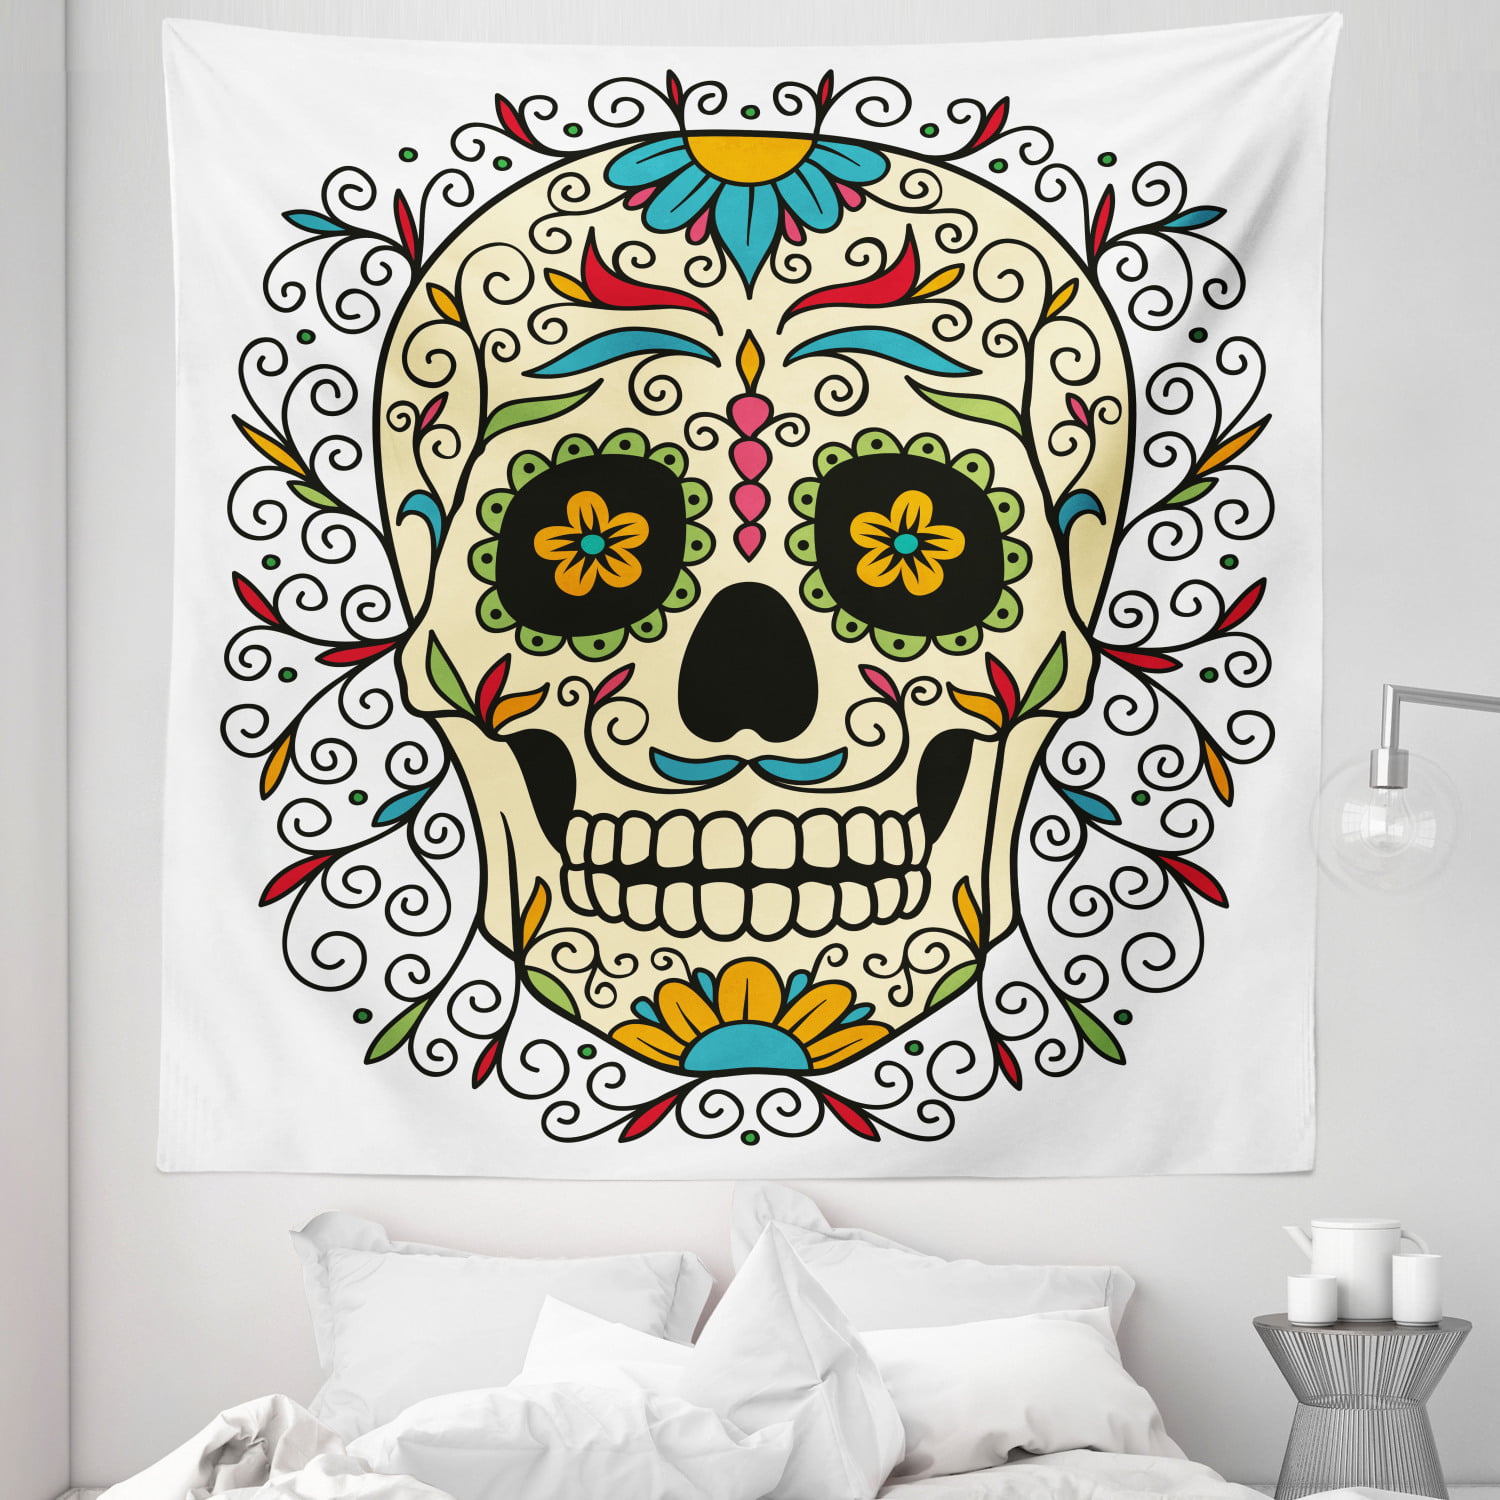 Skull Head On Universe Wall Decor Hanging Tapestry Bohemian Bedspread Drom 